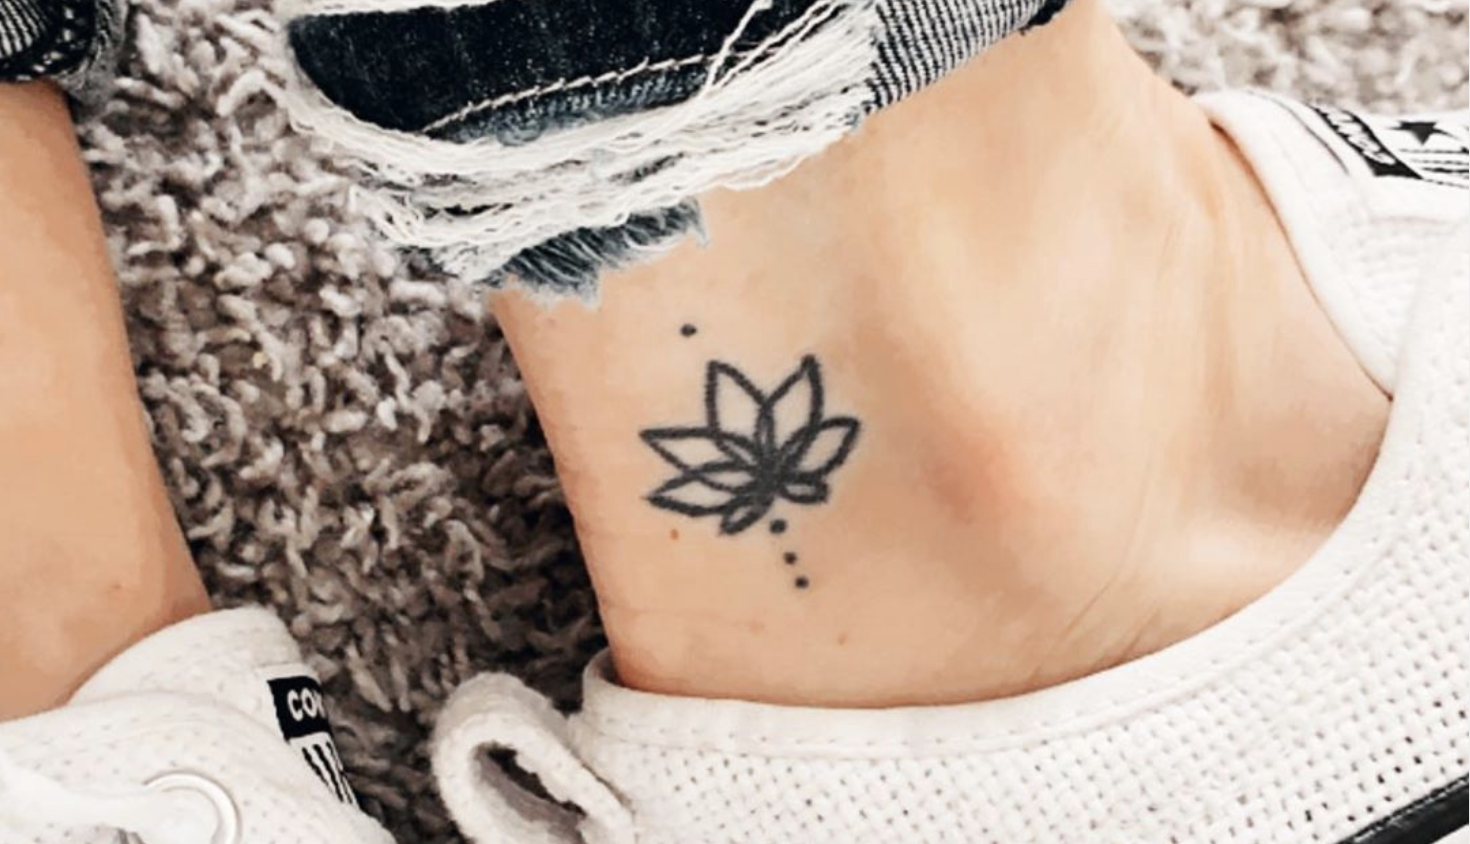 Miscarriage Tattoo - Lotus